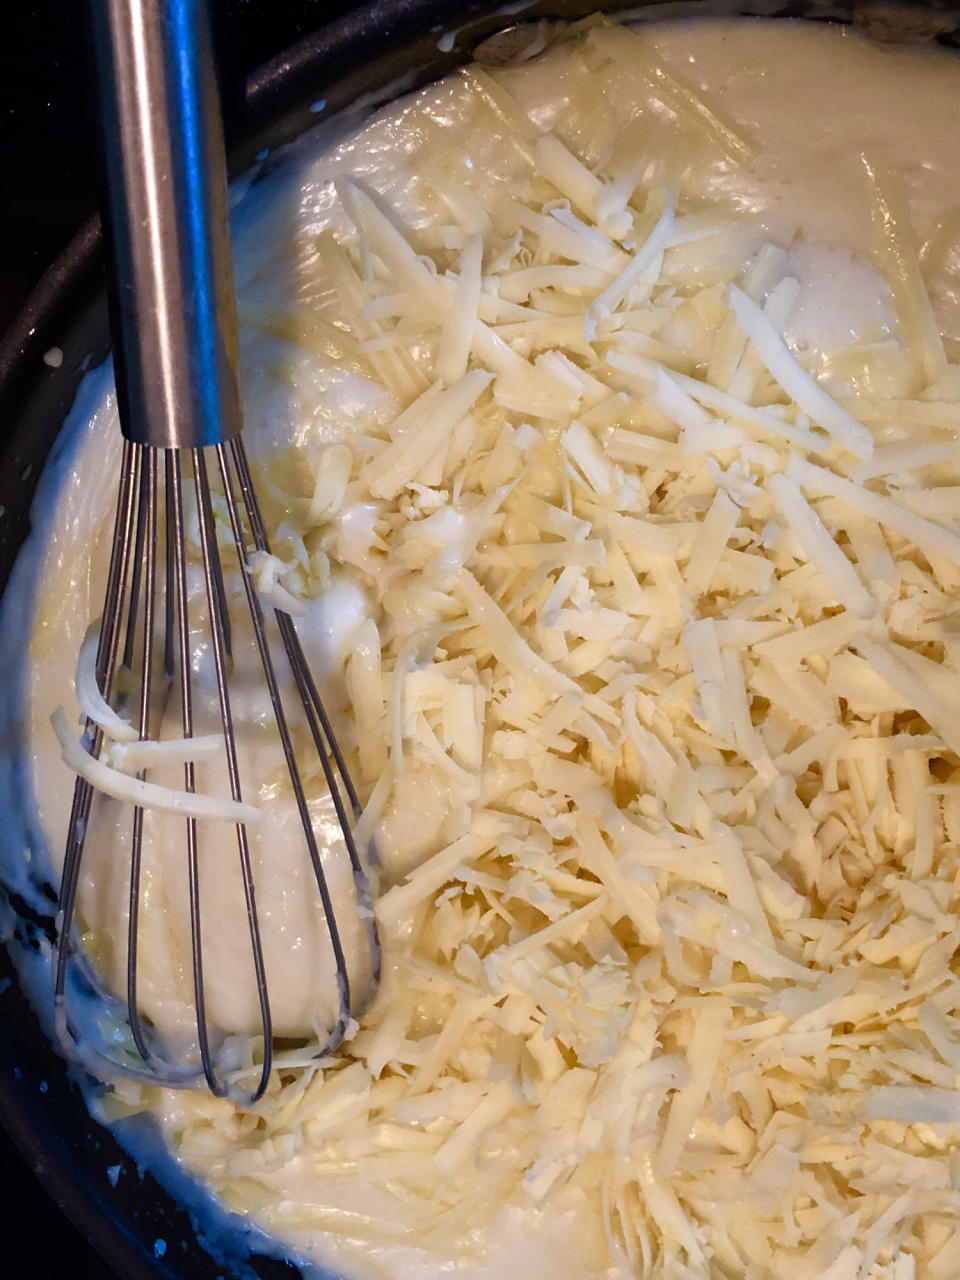 Stirring a homemade cheese sauce.